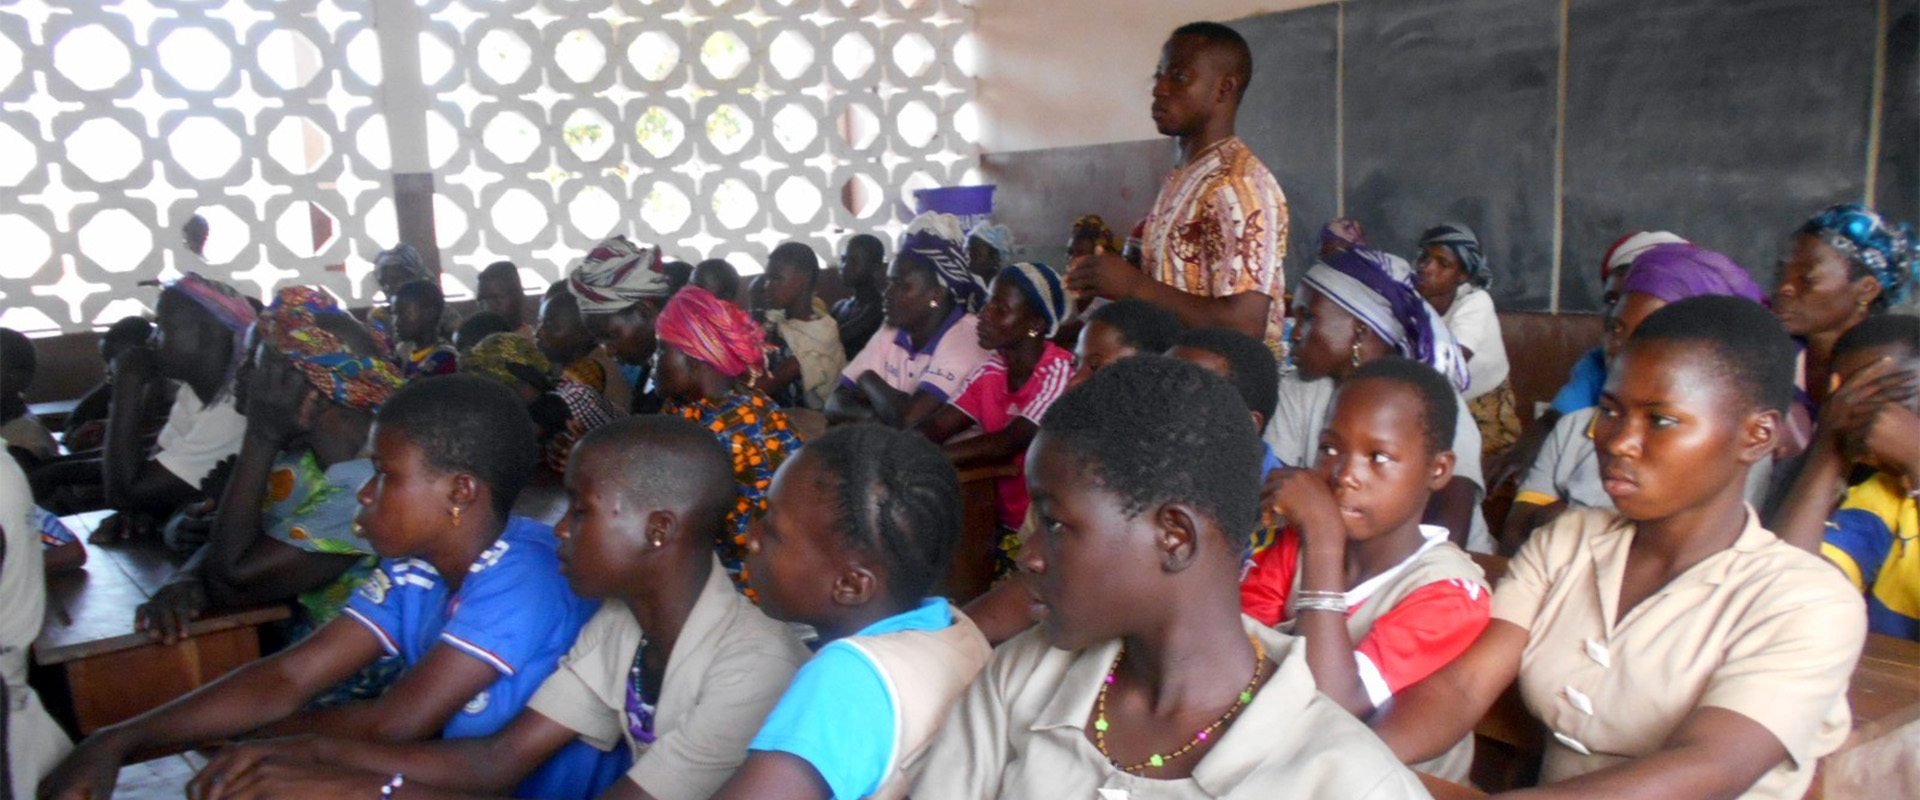 educazione civica bambine istruzione Benin Mani Tese 2018